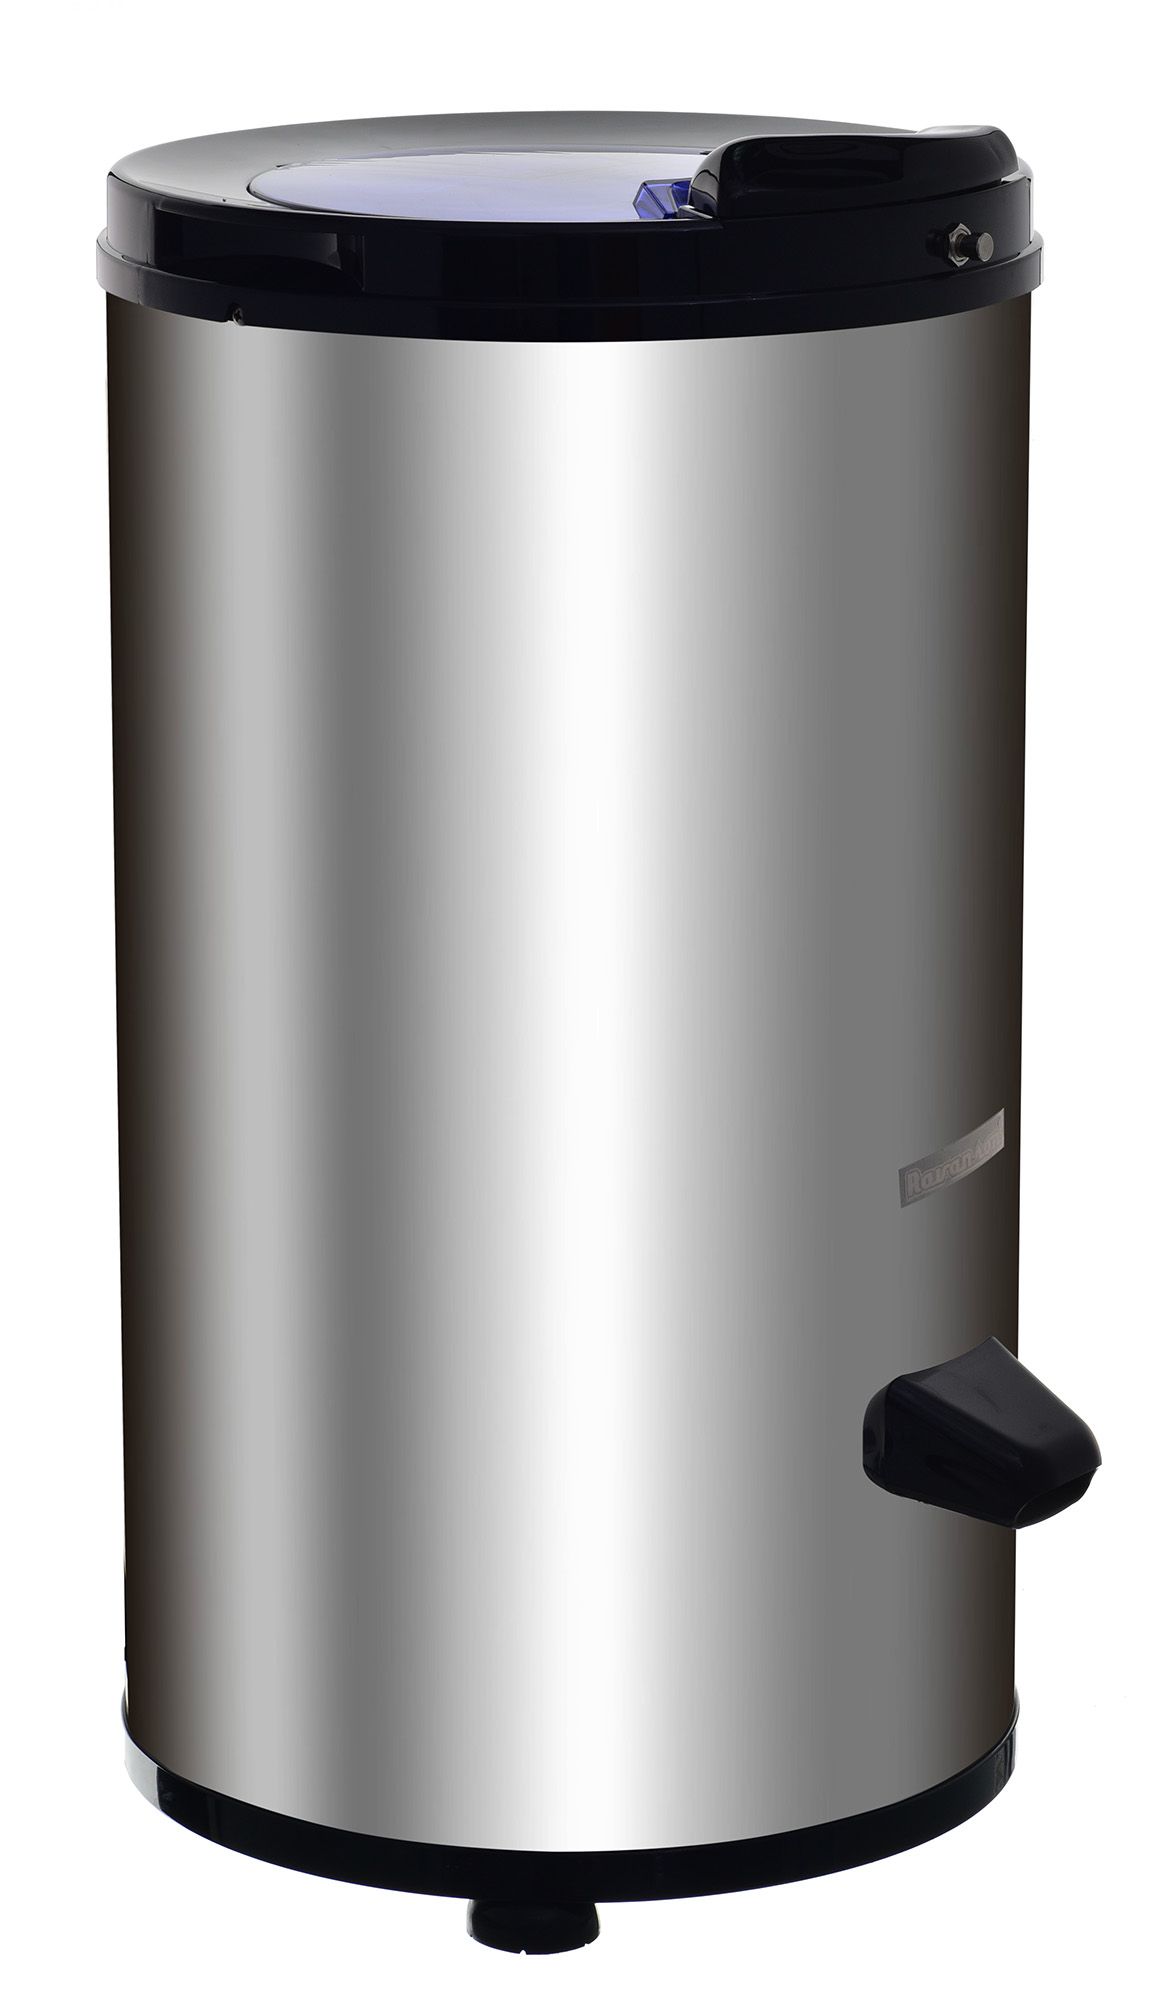 Spin dryer Ravanson XPB2800-X 6 kg 2800 RPM Stainless steel (inox)_3